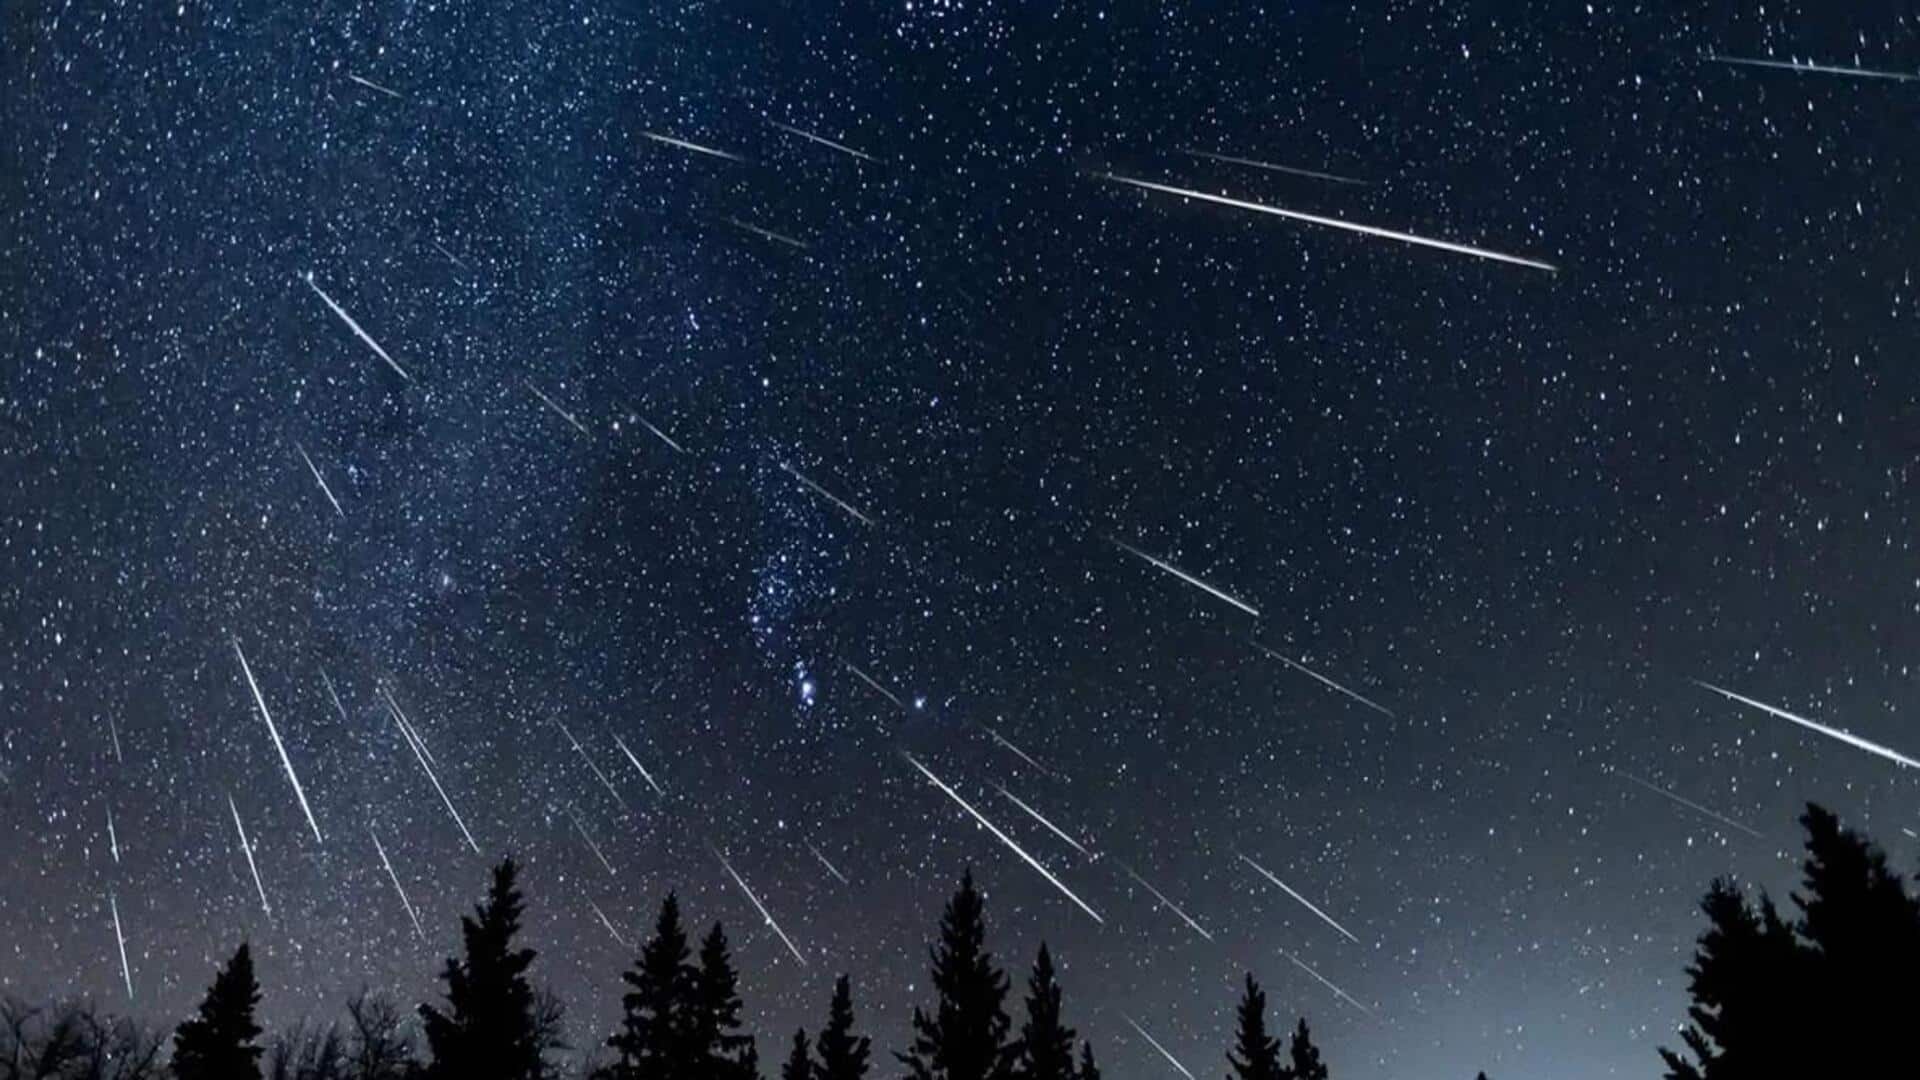 Leonid meteor shower peaks tonight: How to watch shooting stars